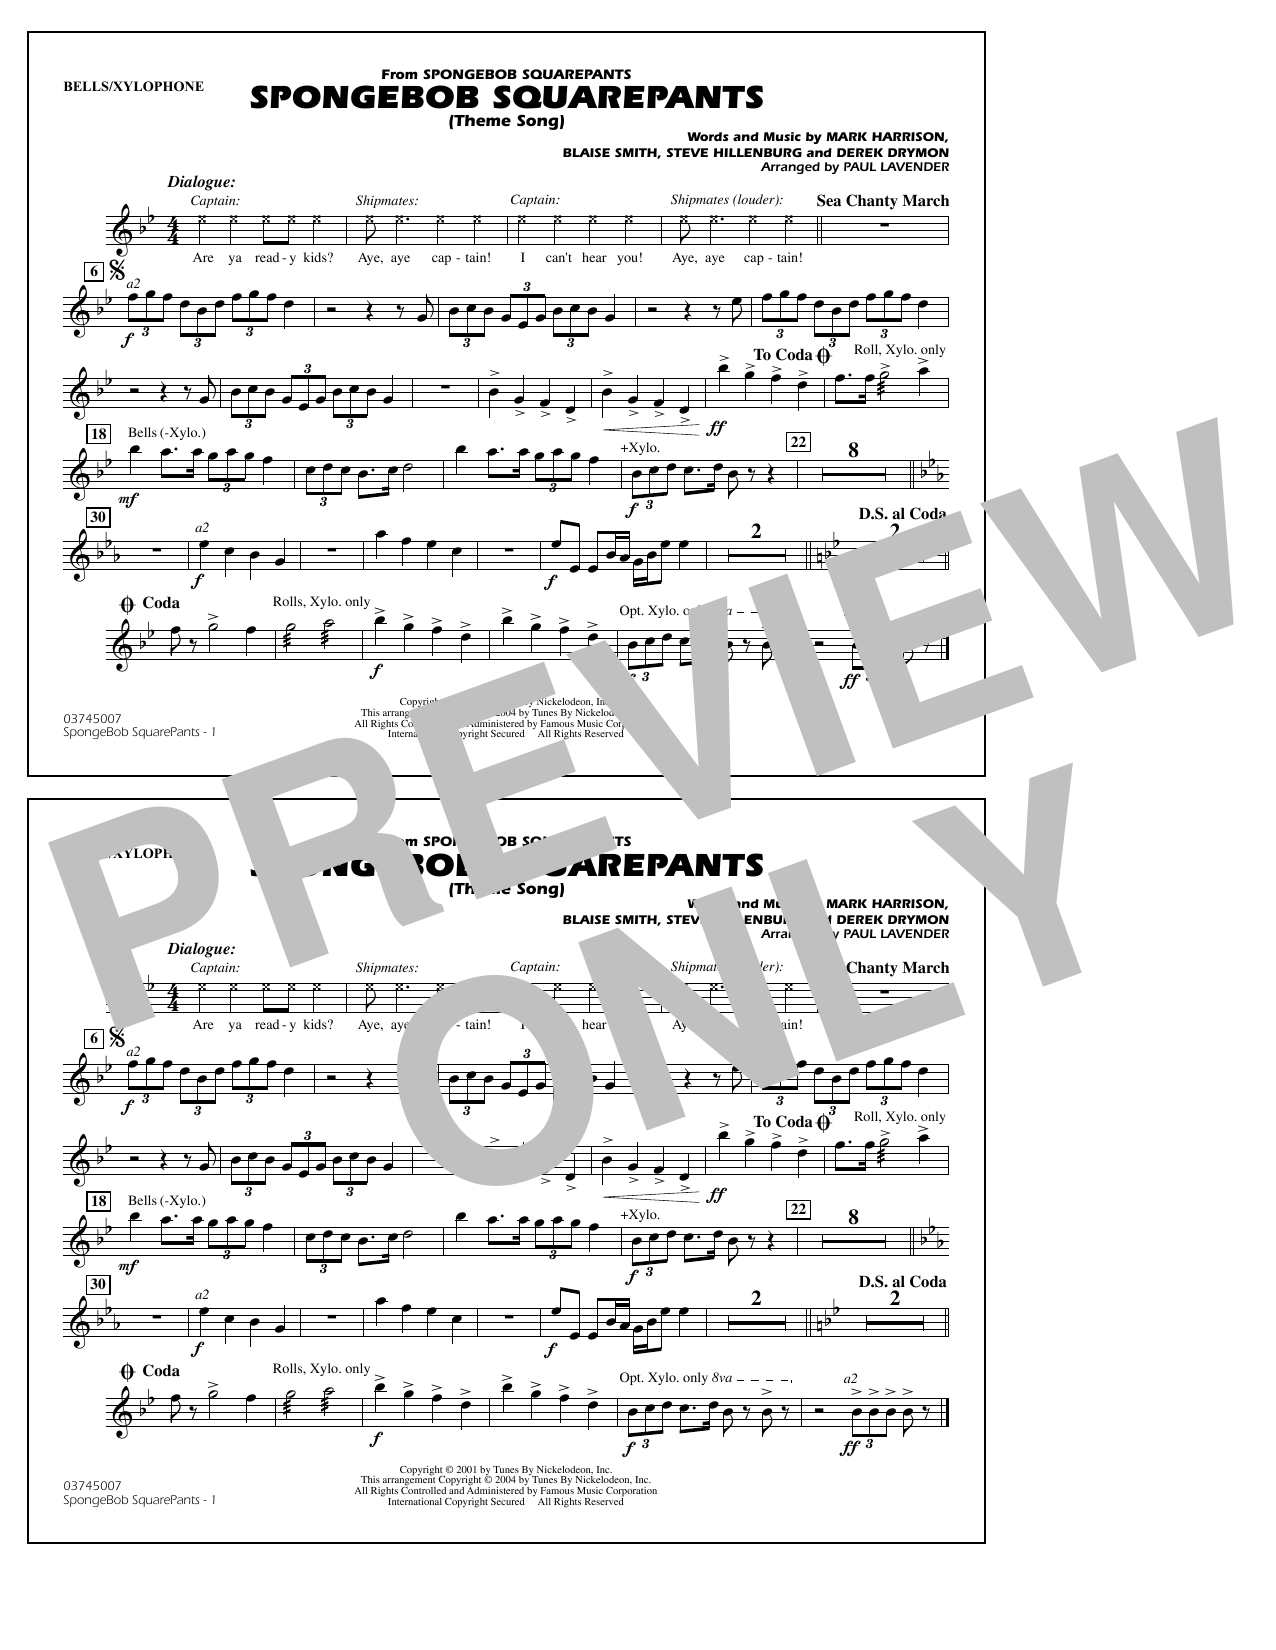 Steve Hillenburg Spongebob Squarepants (Theme Song) (arr. Paul Lavender) - Bells/Xylophone sheet music notes and chords arranged for Marching Band